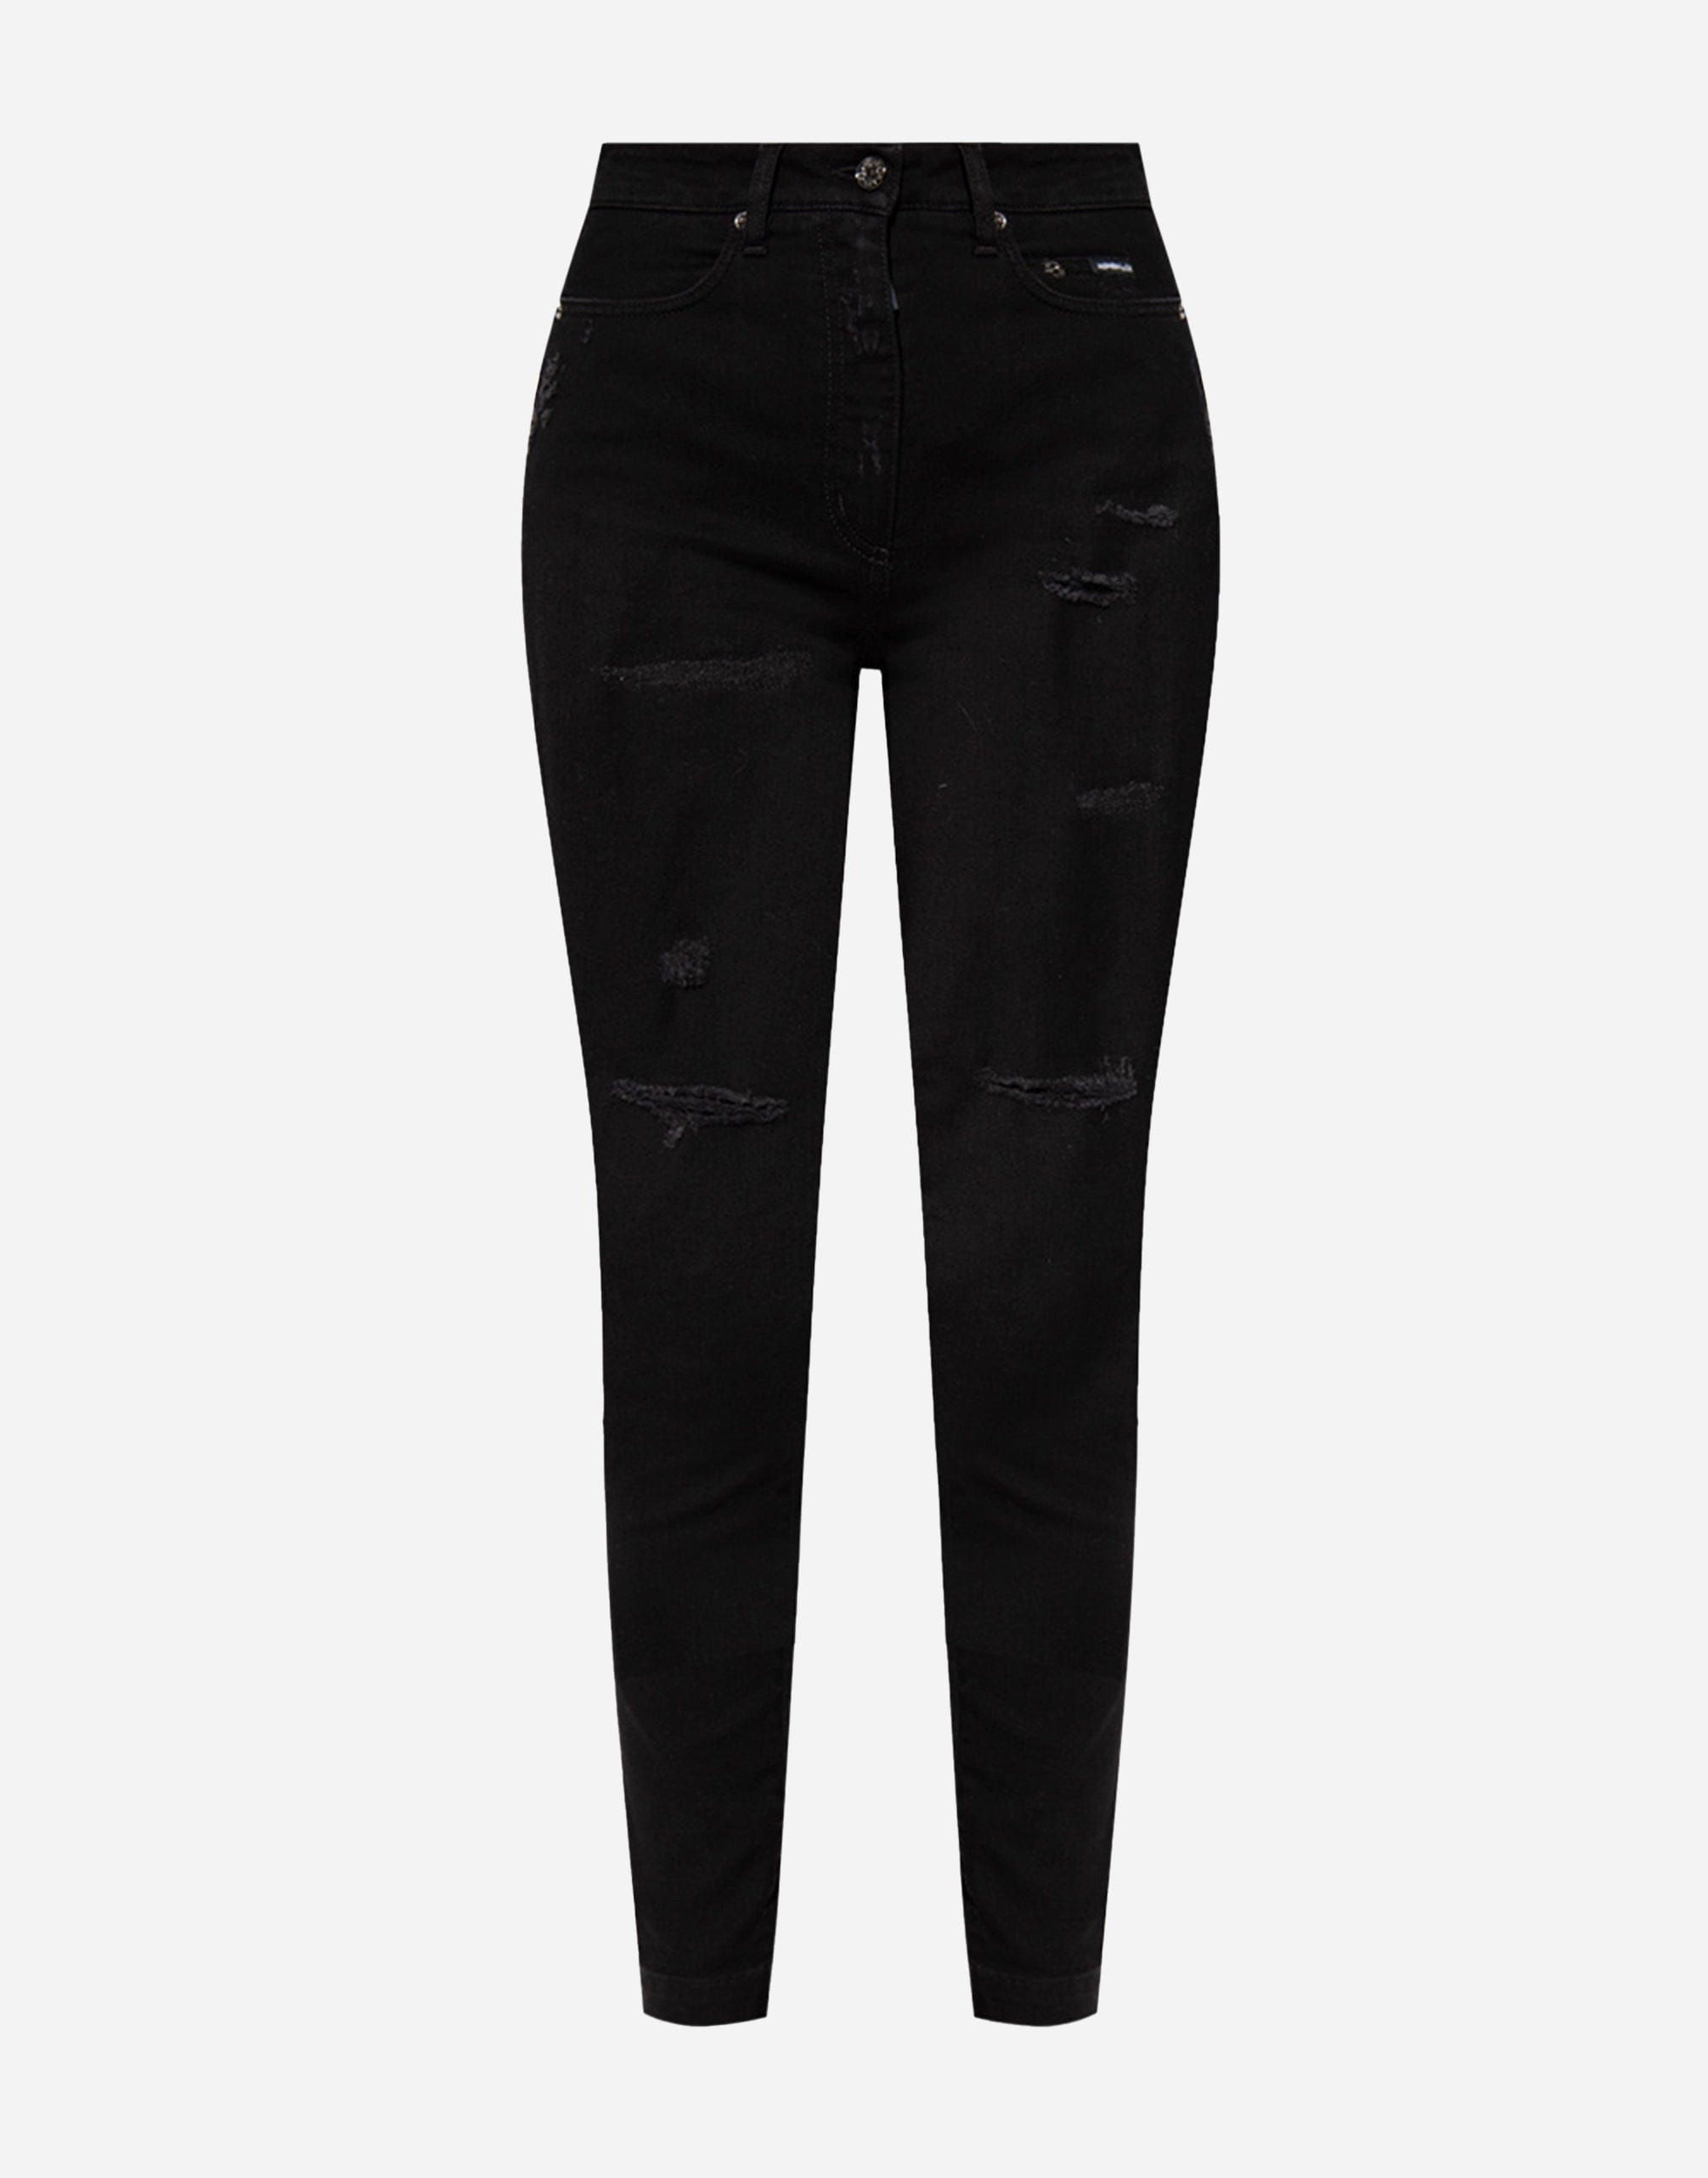 Dolce & Gabbana Audrey High-Wasit Cotton Jeans